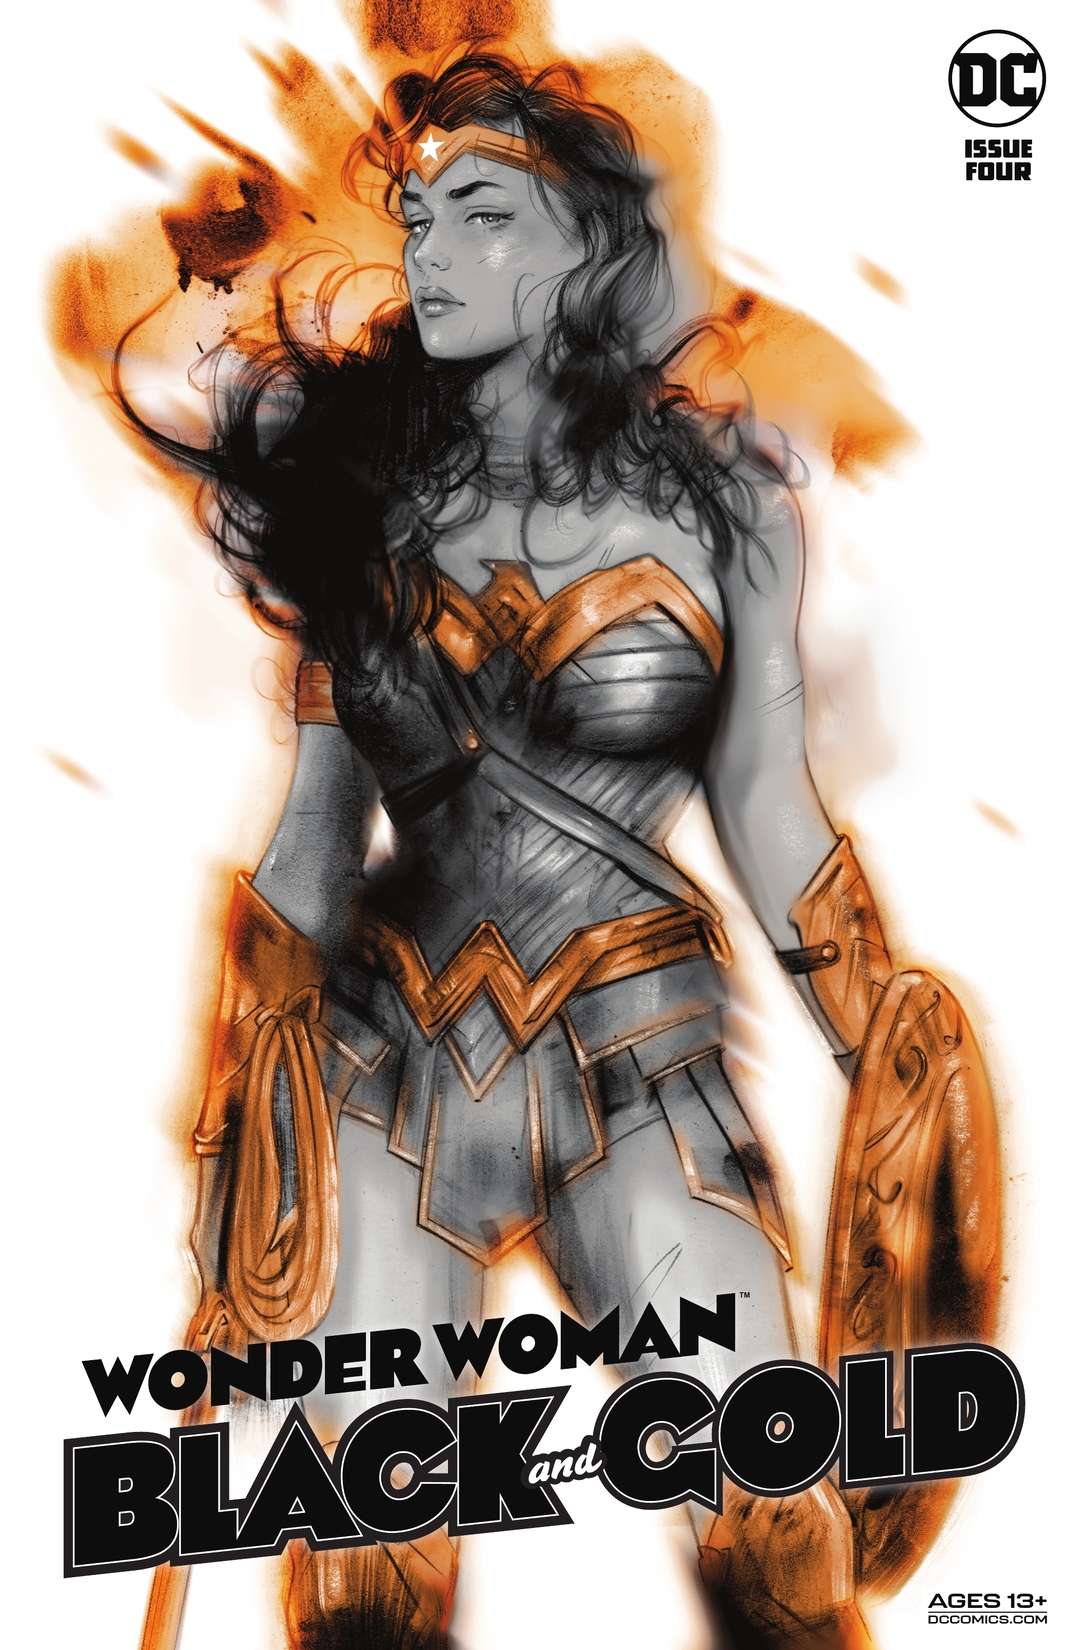 Wonder Woman Black & Gold #4 preview images